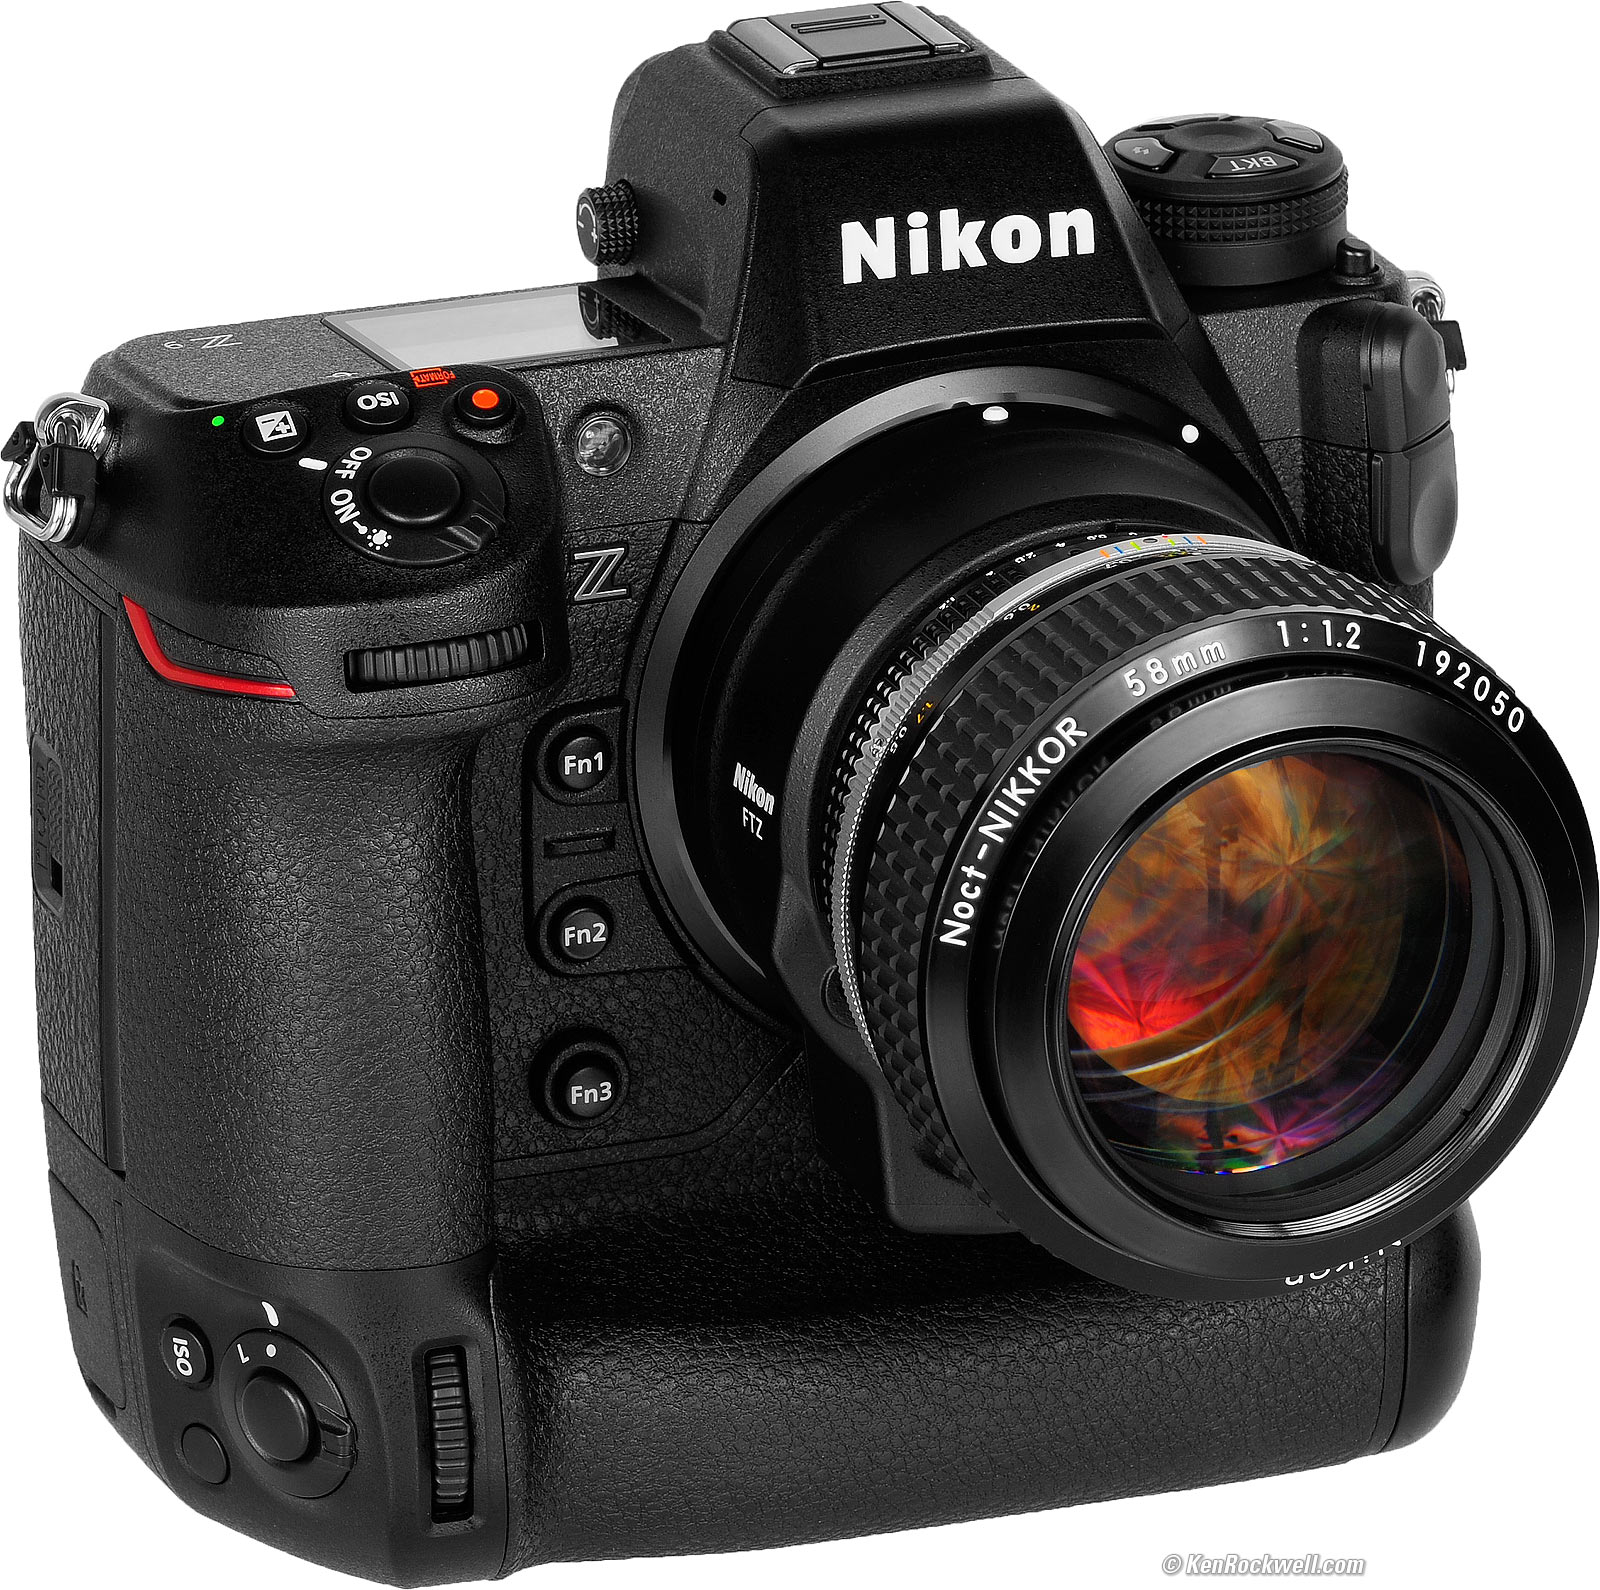 Onzuiver ideologie Fondsen Nikon Digital Camera History DSLR & Mirrorless